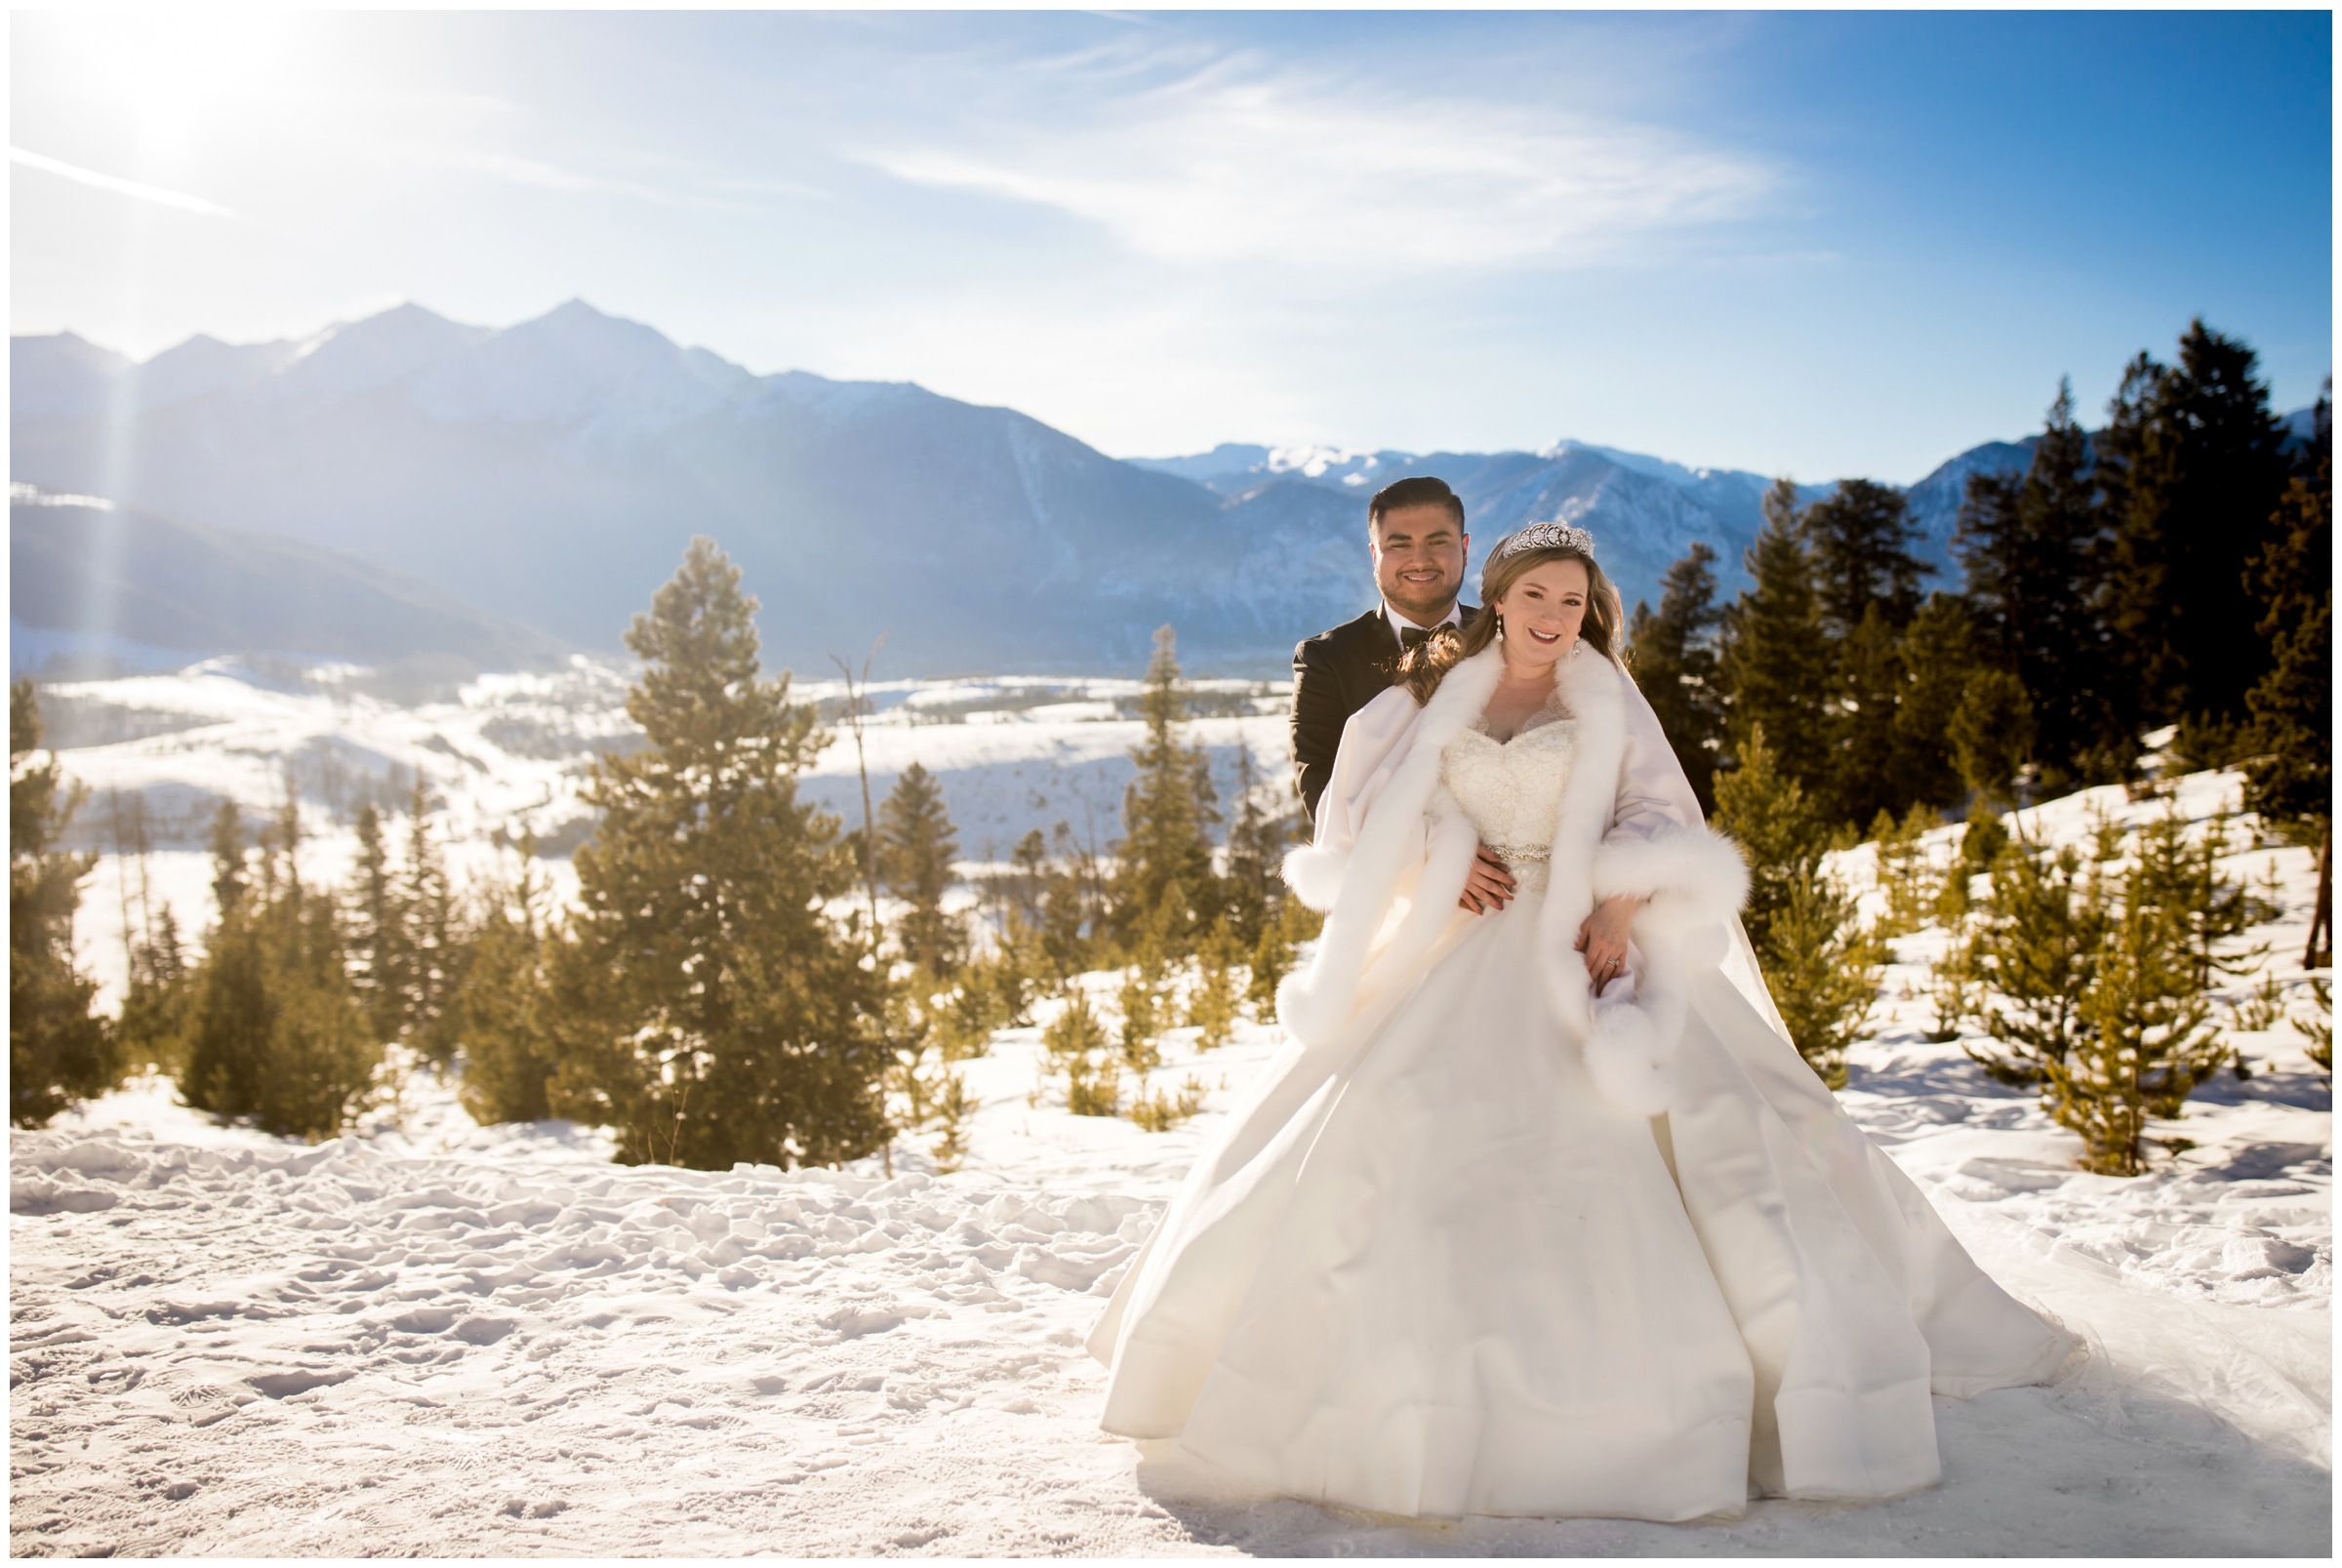 Sapphire Point wedding photos by Breckenridge photographer Plum Pretty Photography. Snowy Colorado winter elopement inspiration.